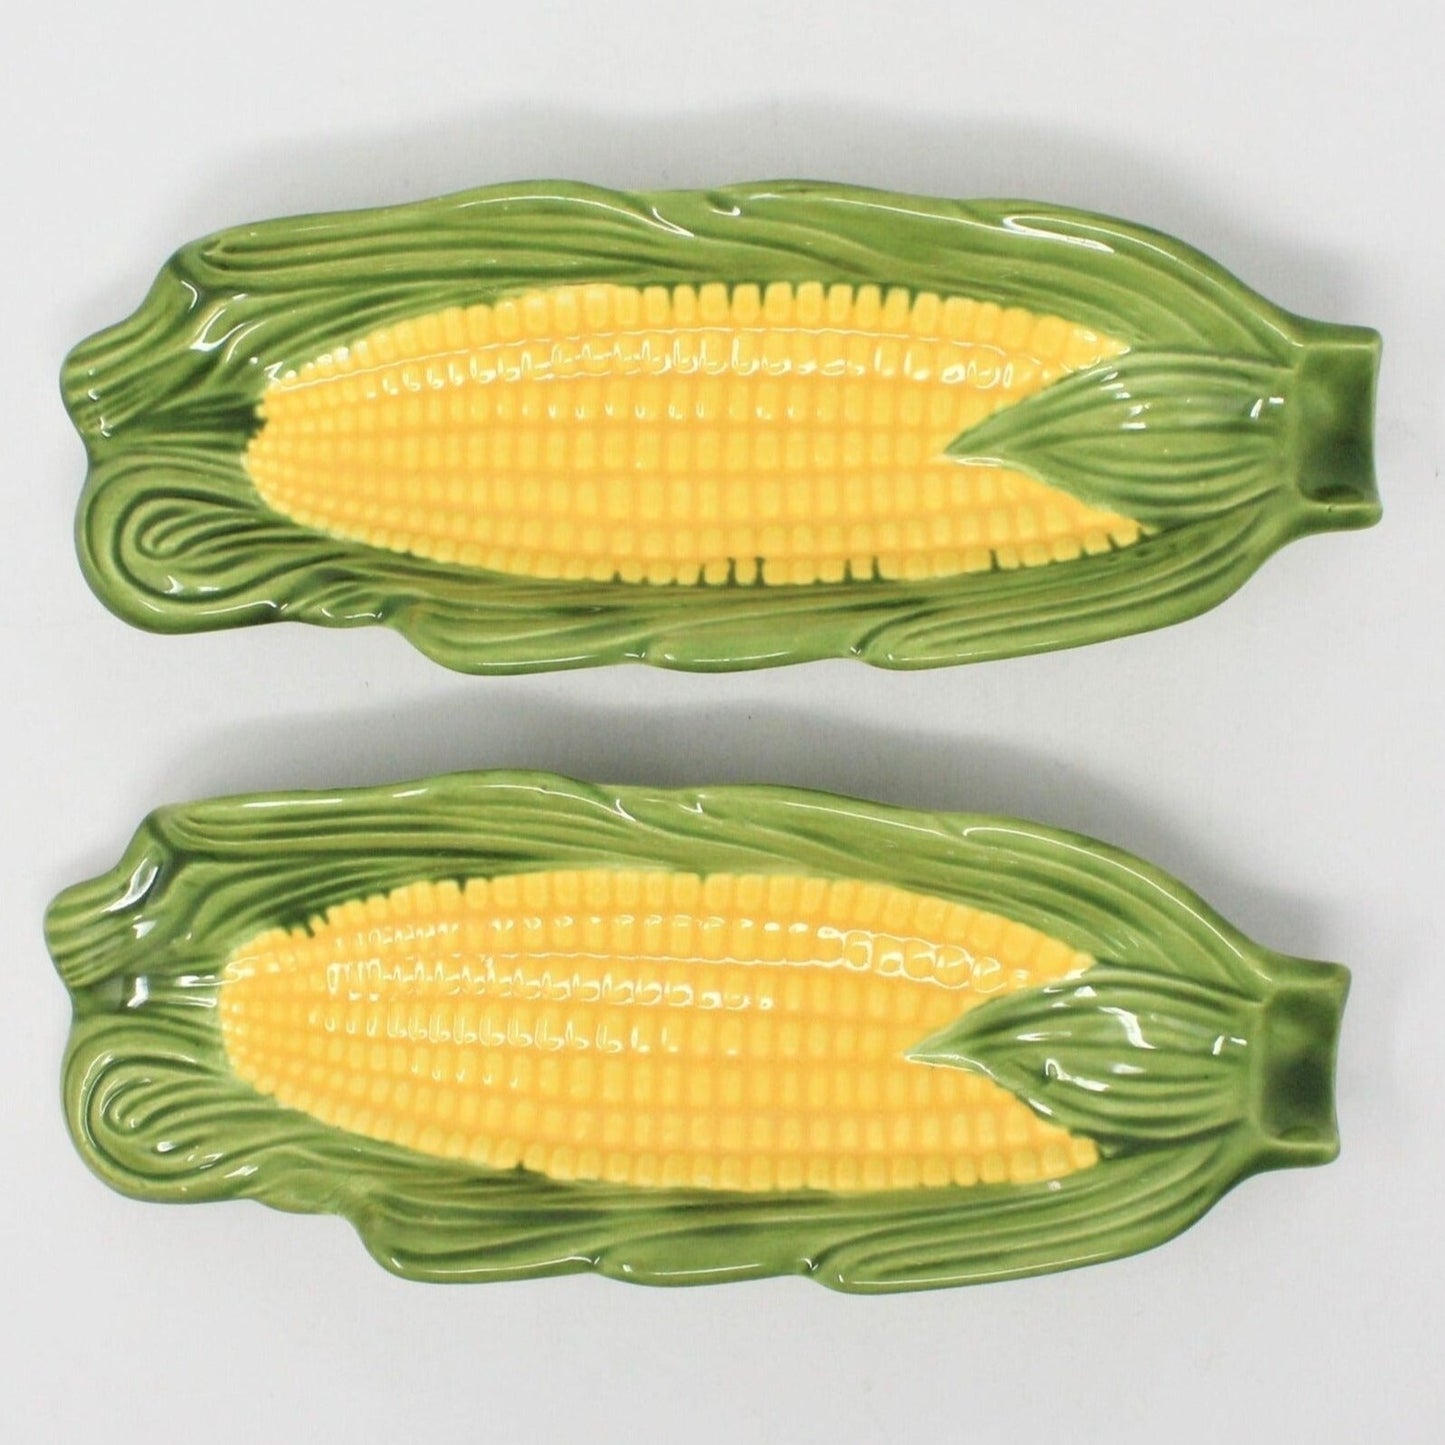 Corn Servers, Corn on the Cob (Dark Green), Set of 2, Vintage